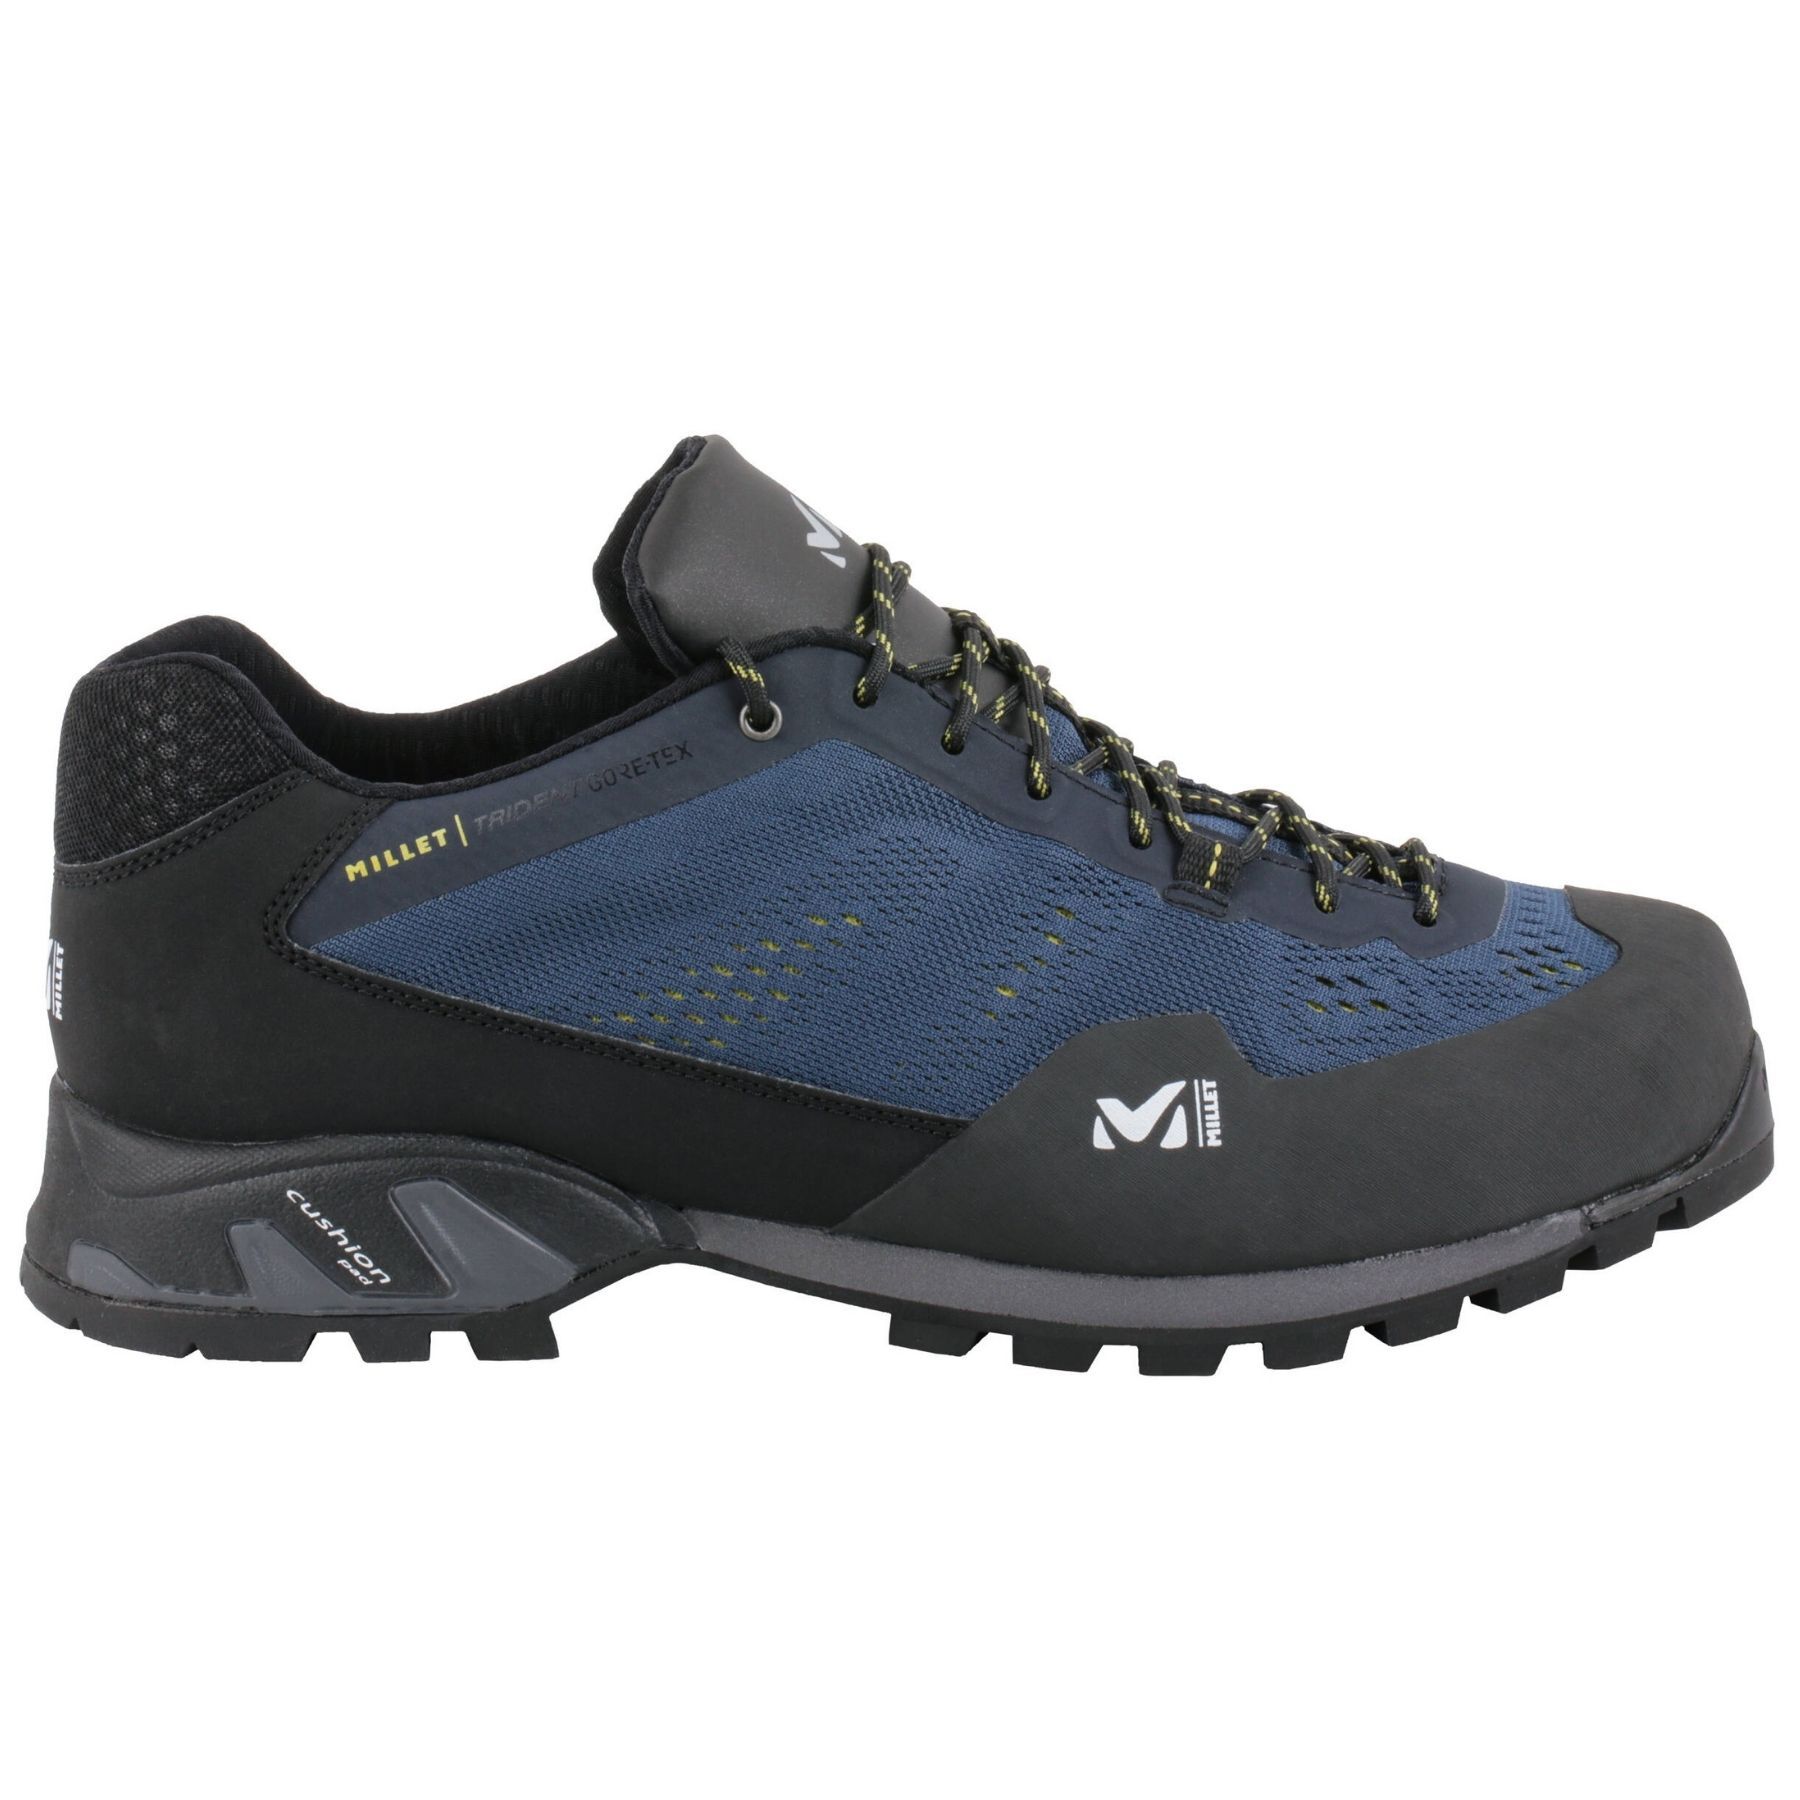 Millet Trident GTX - Walking shoes - Men's